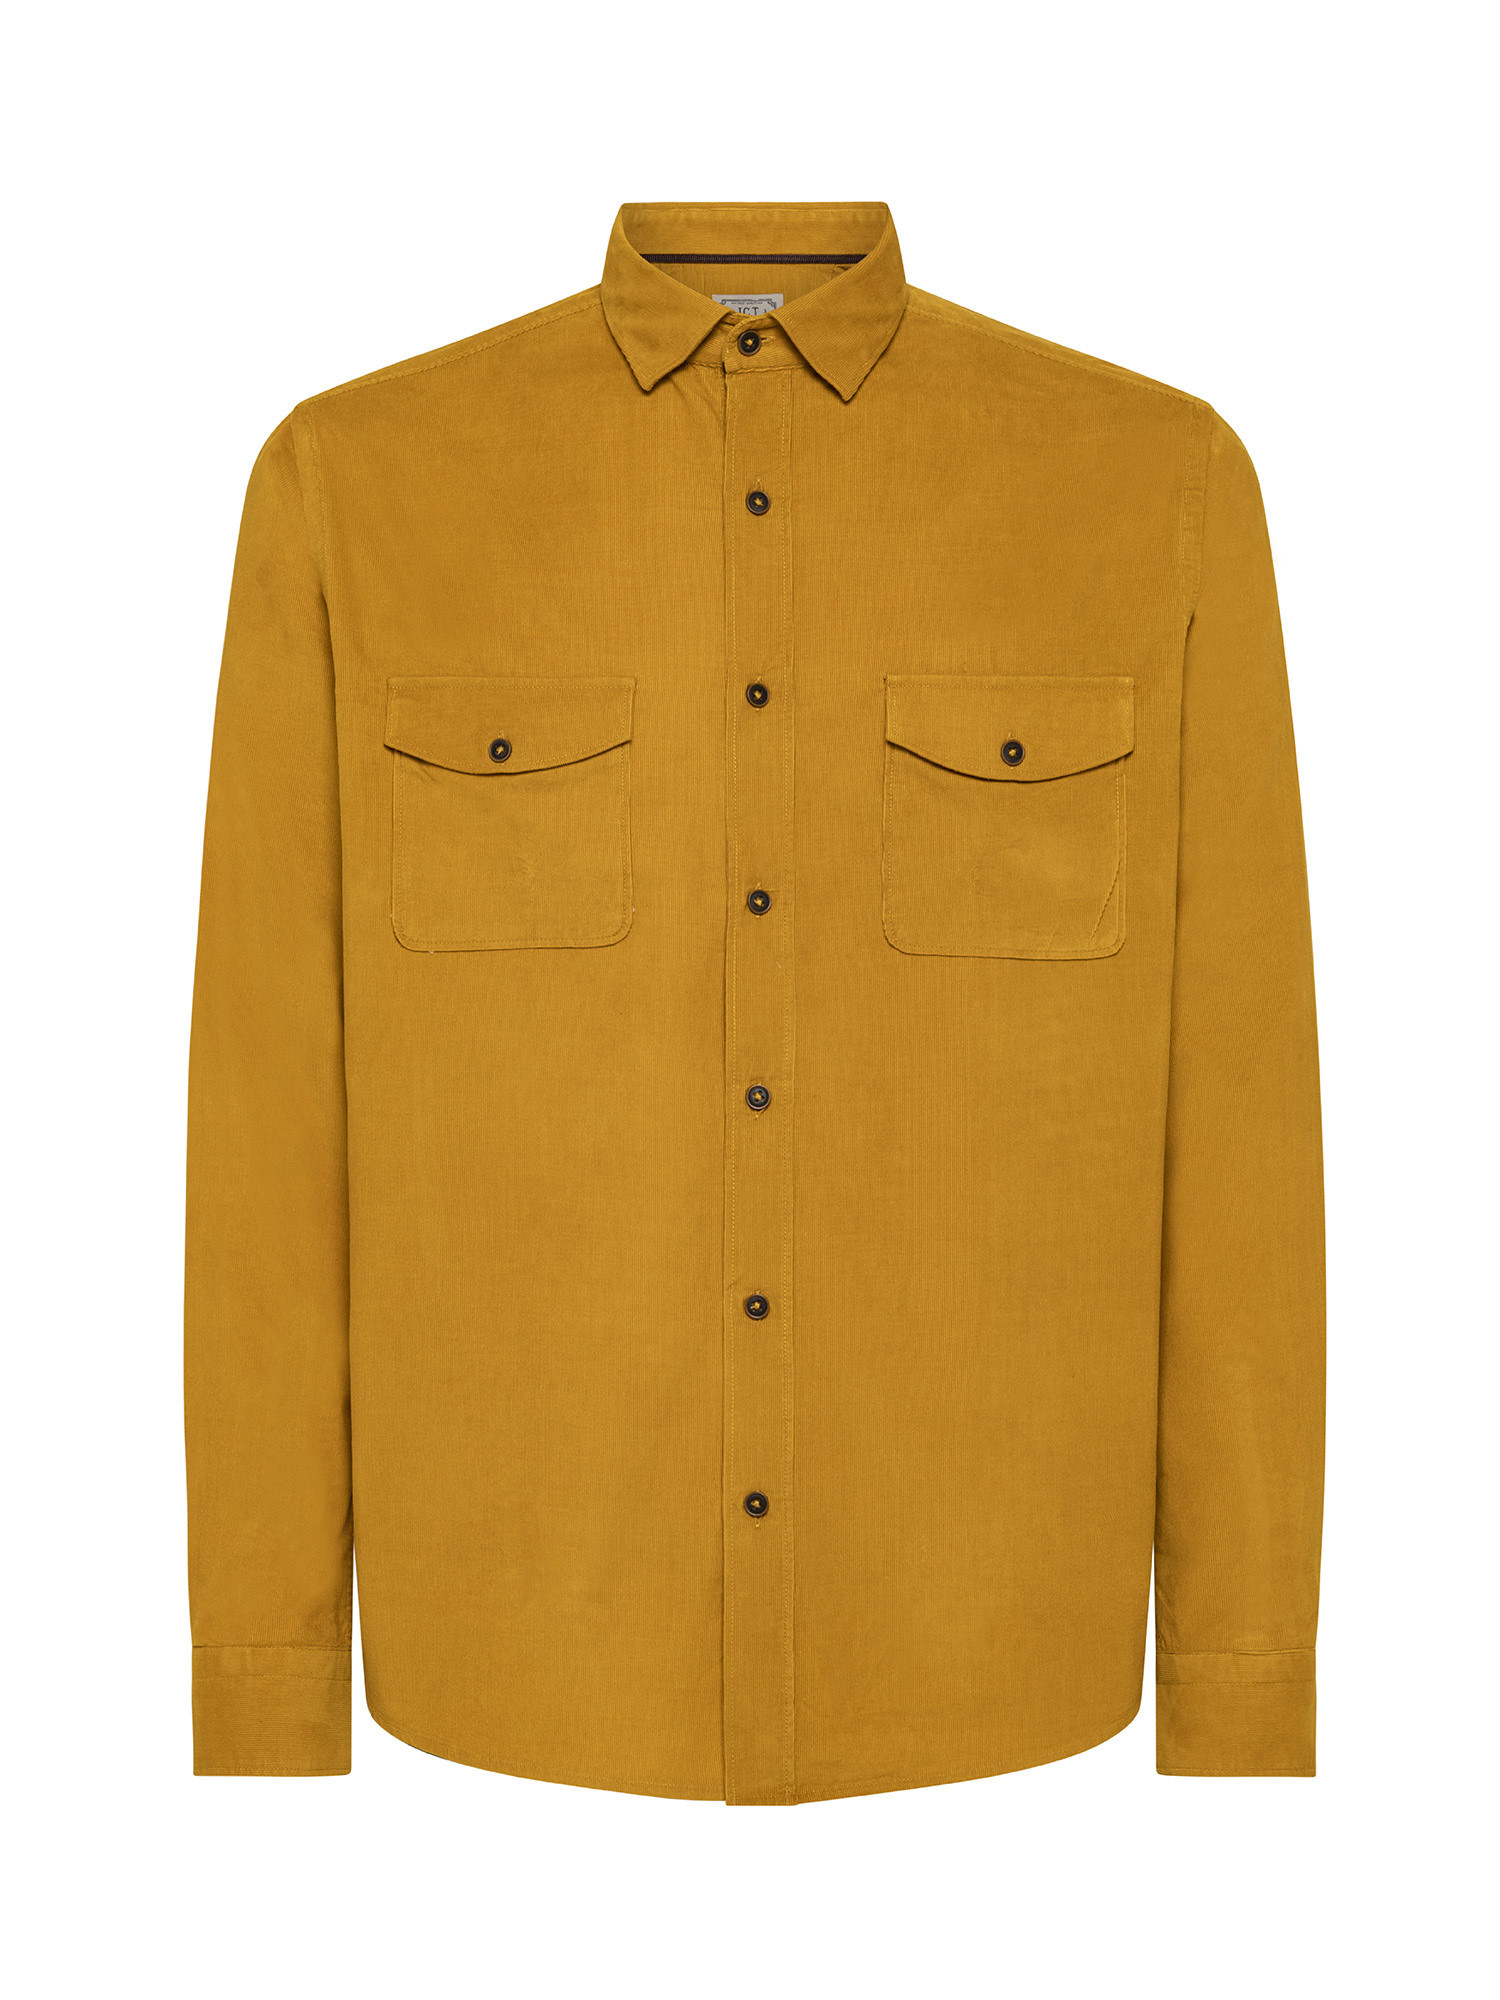 JCT - Cotton velvet shirt, Mustard Yellow, large image number 0